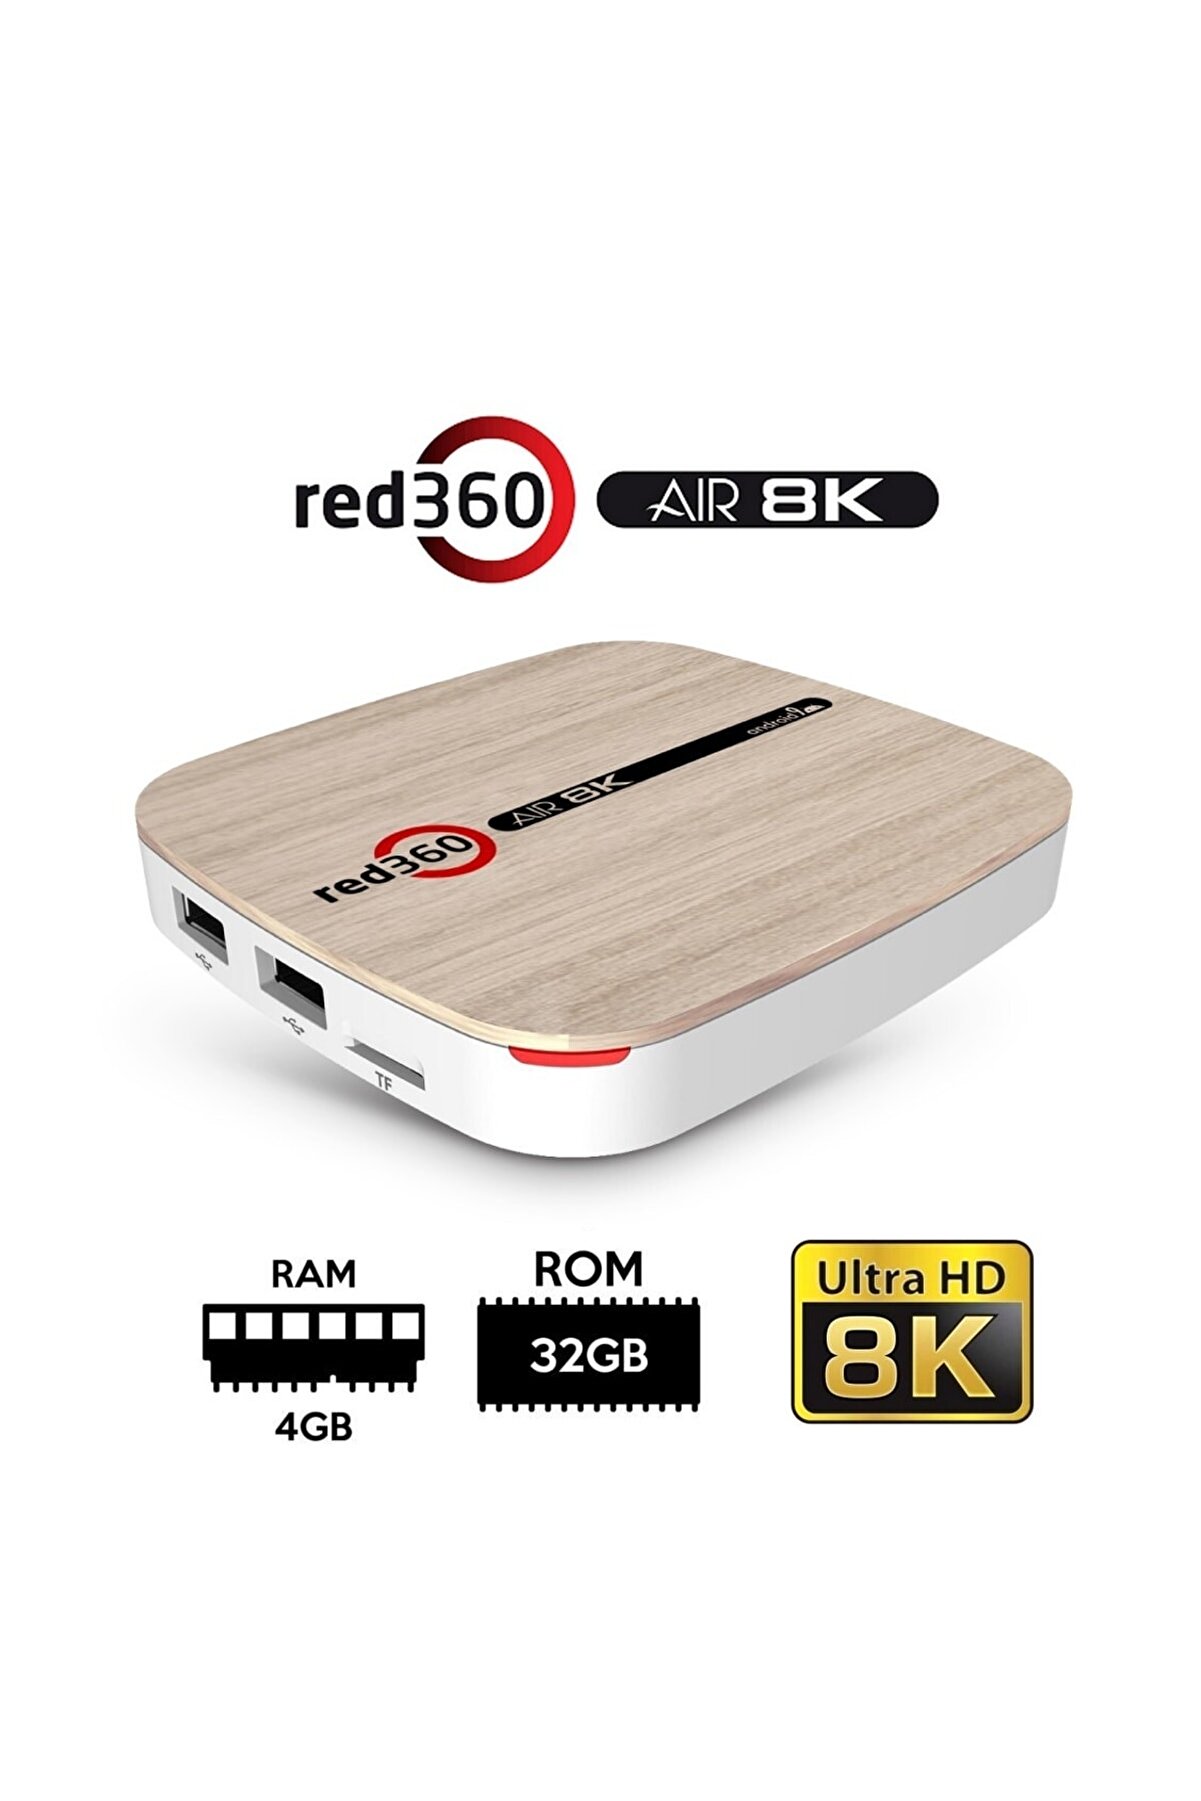 Redline Red 360air 8k 4gbddr3 Ram 32gb Rom Android Tv Box